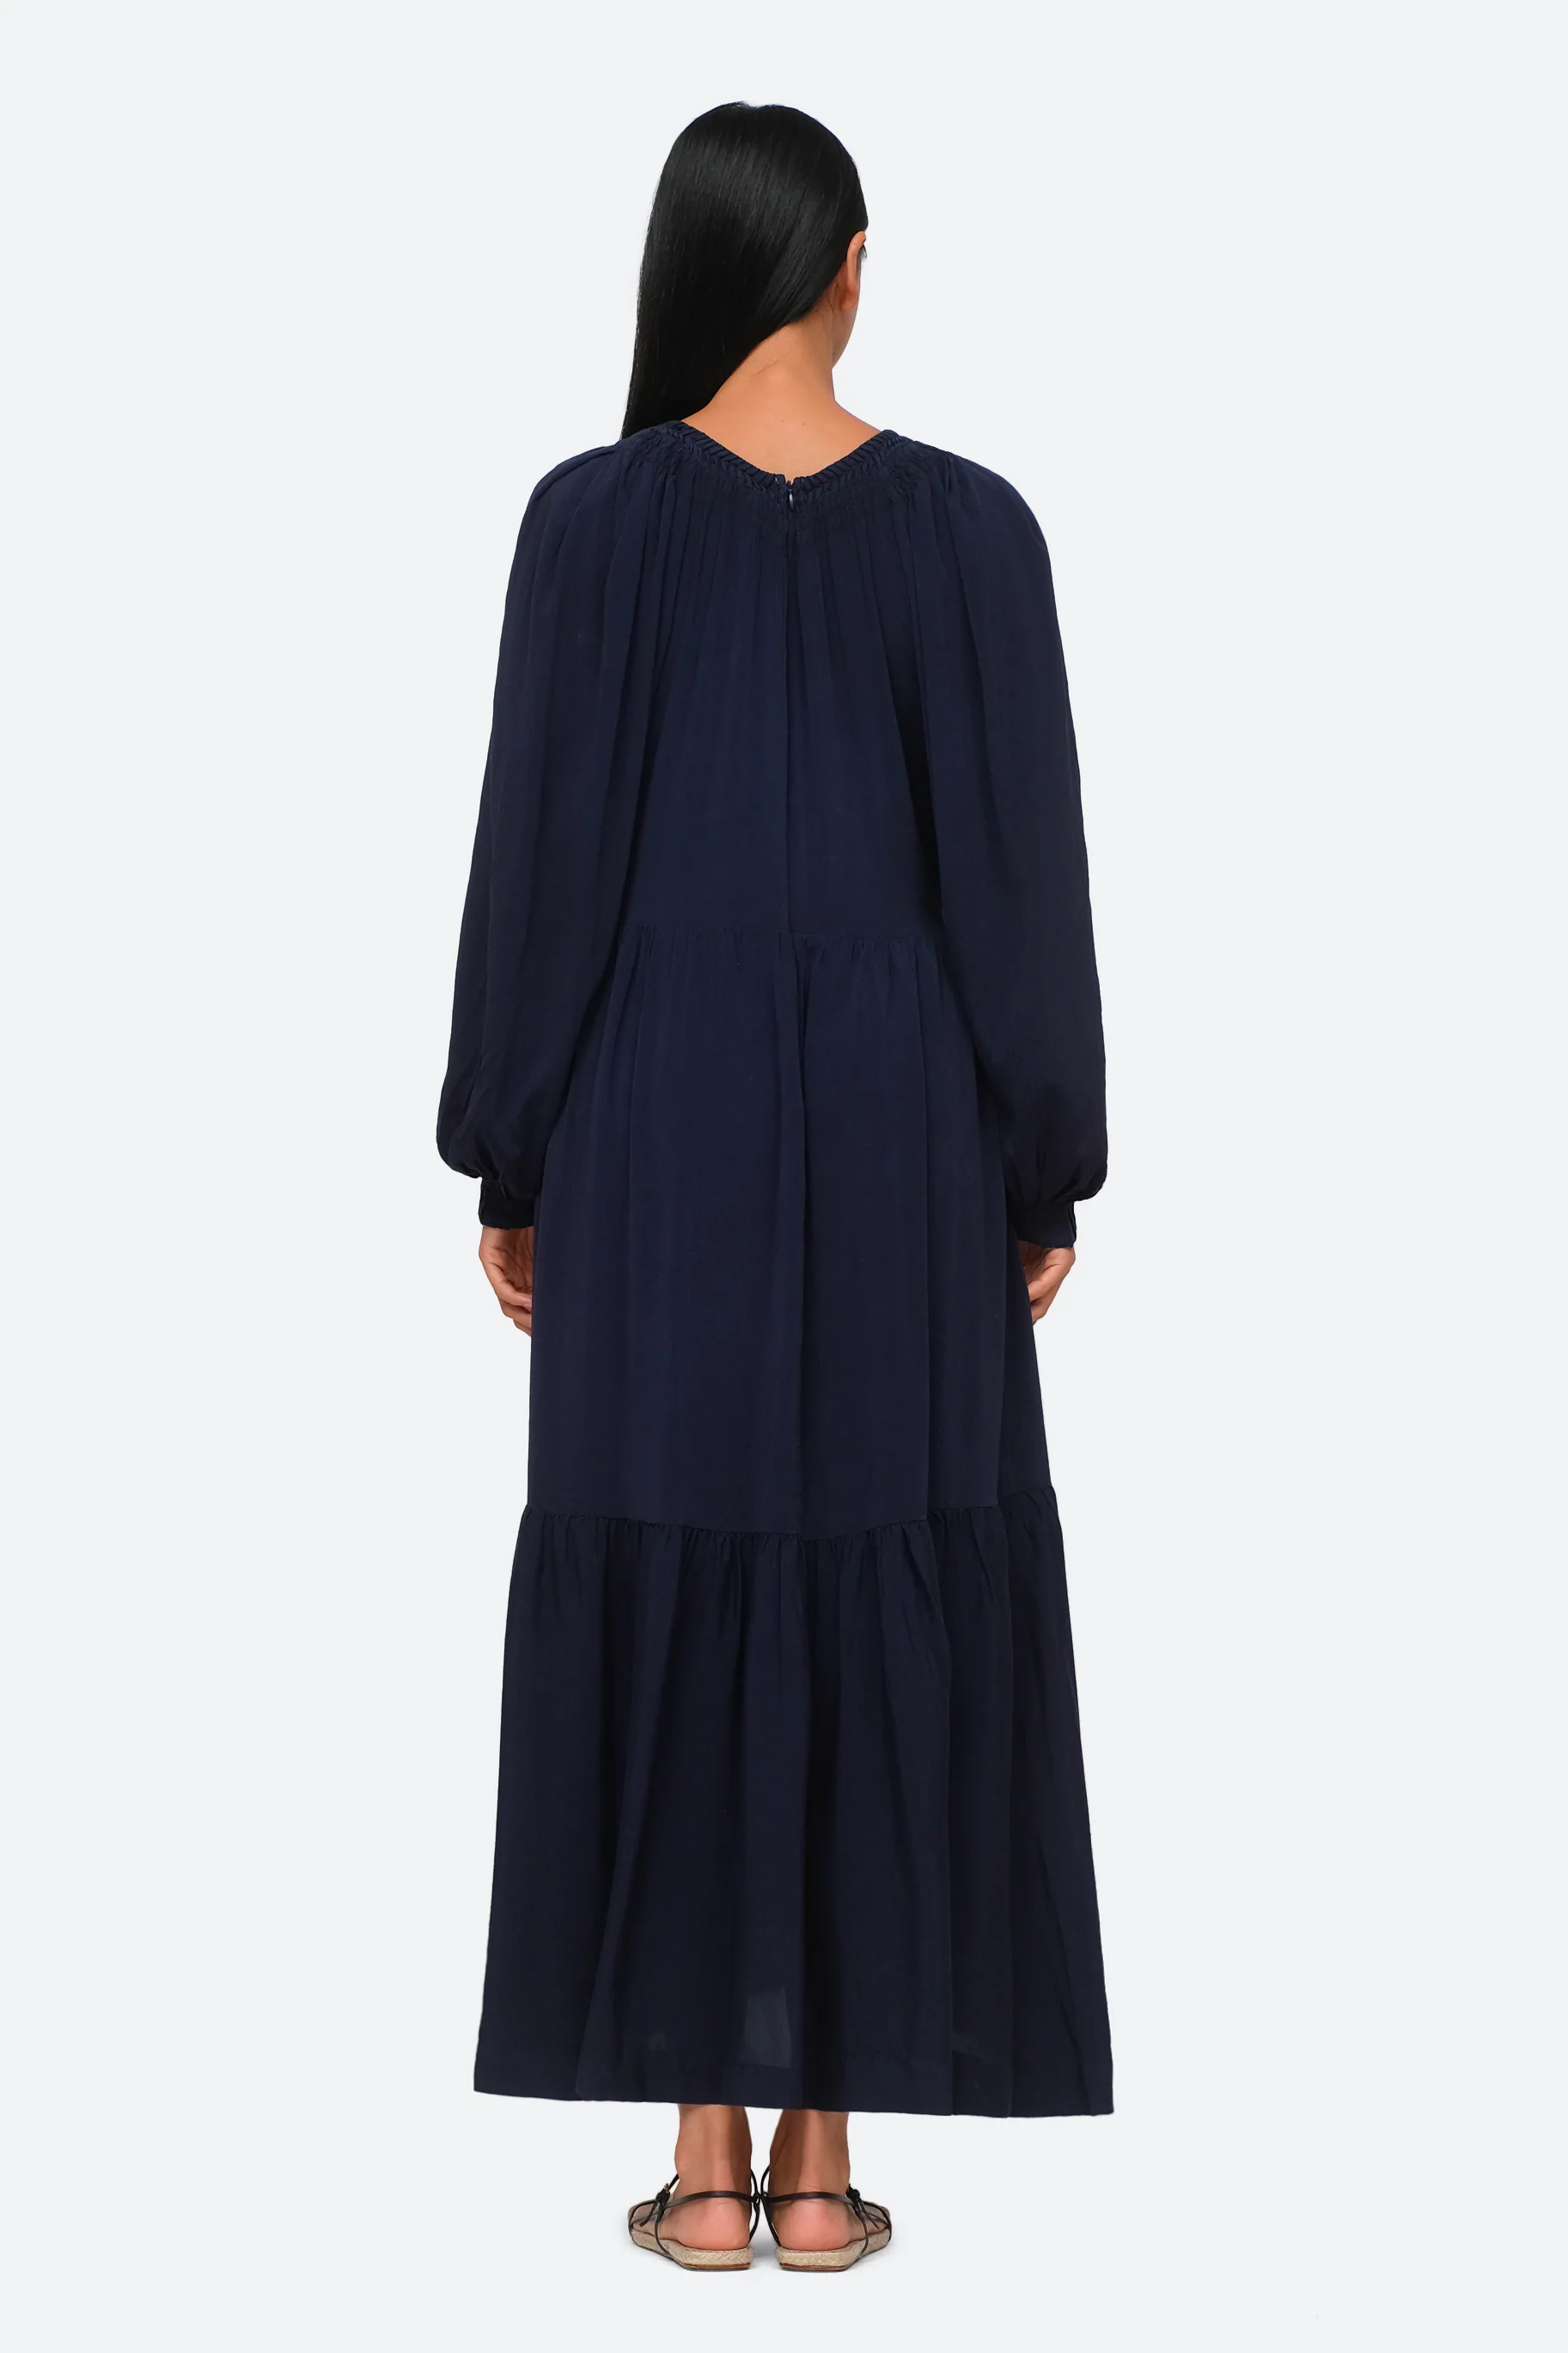 Product Image for Nyla Dress, Navy